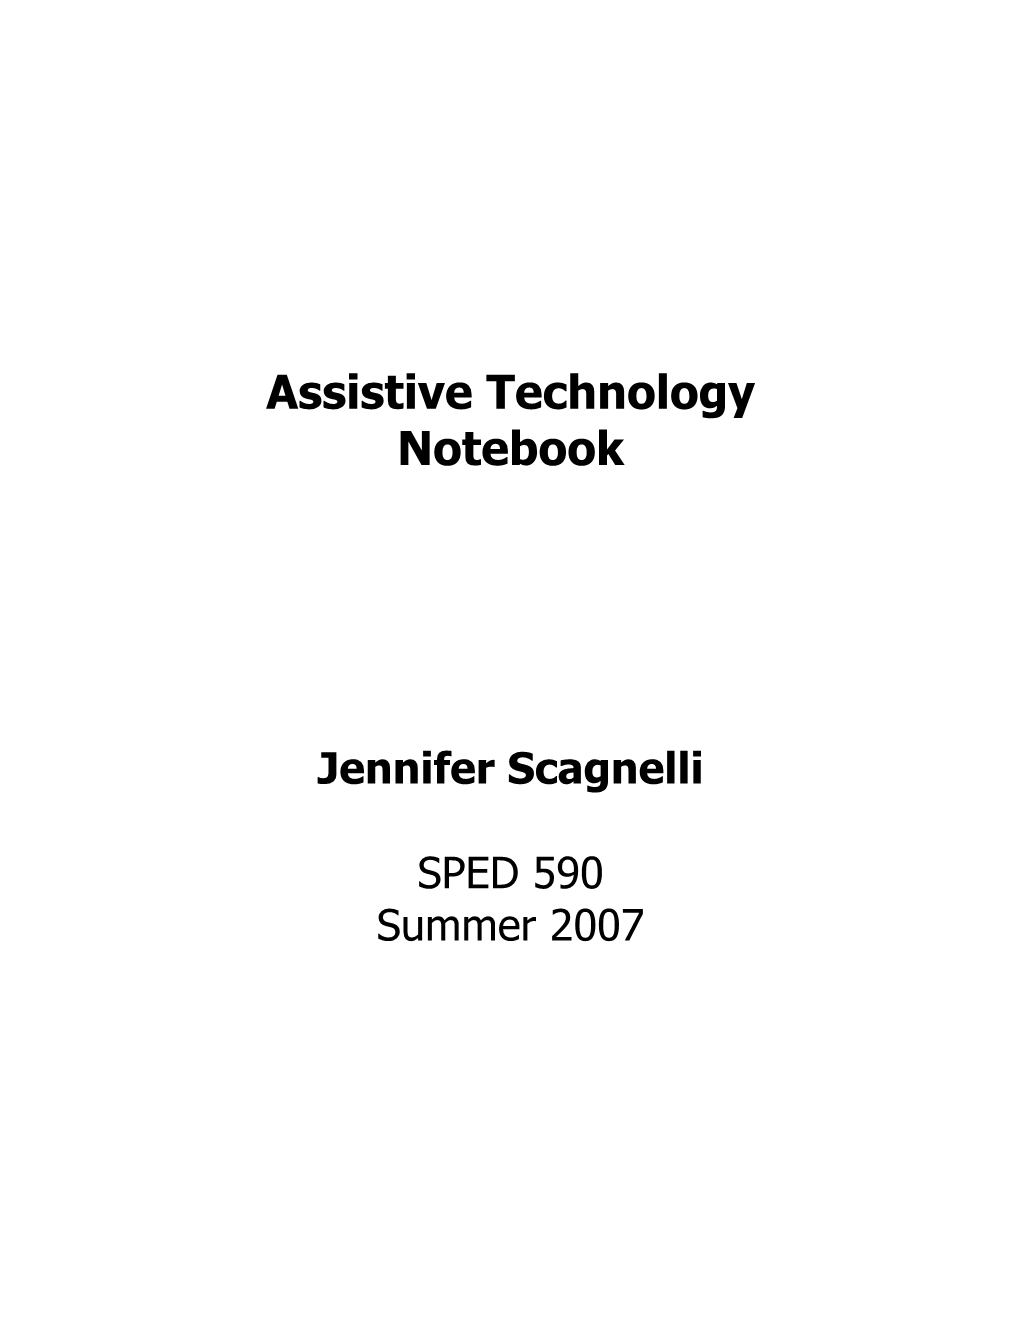 Assistive Technology Notebook